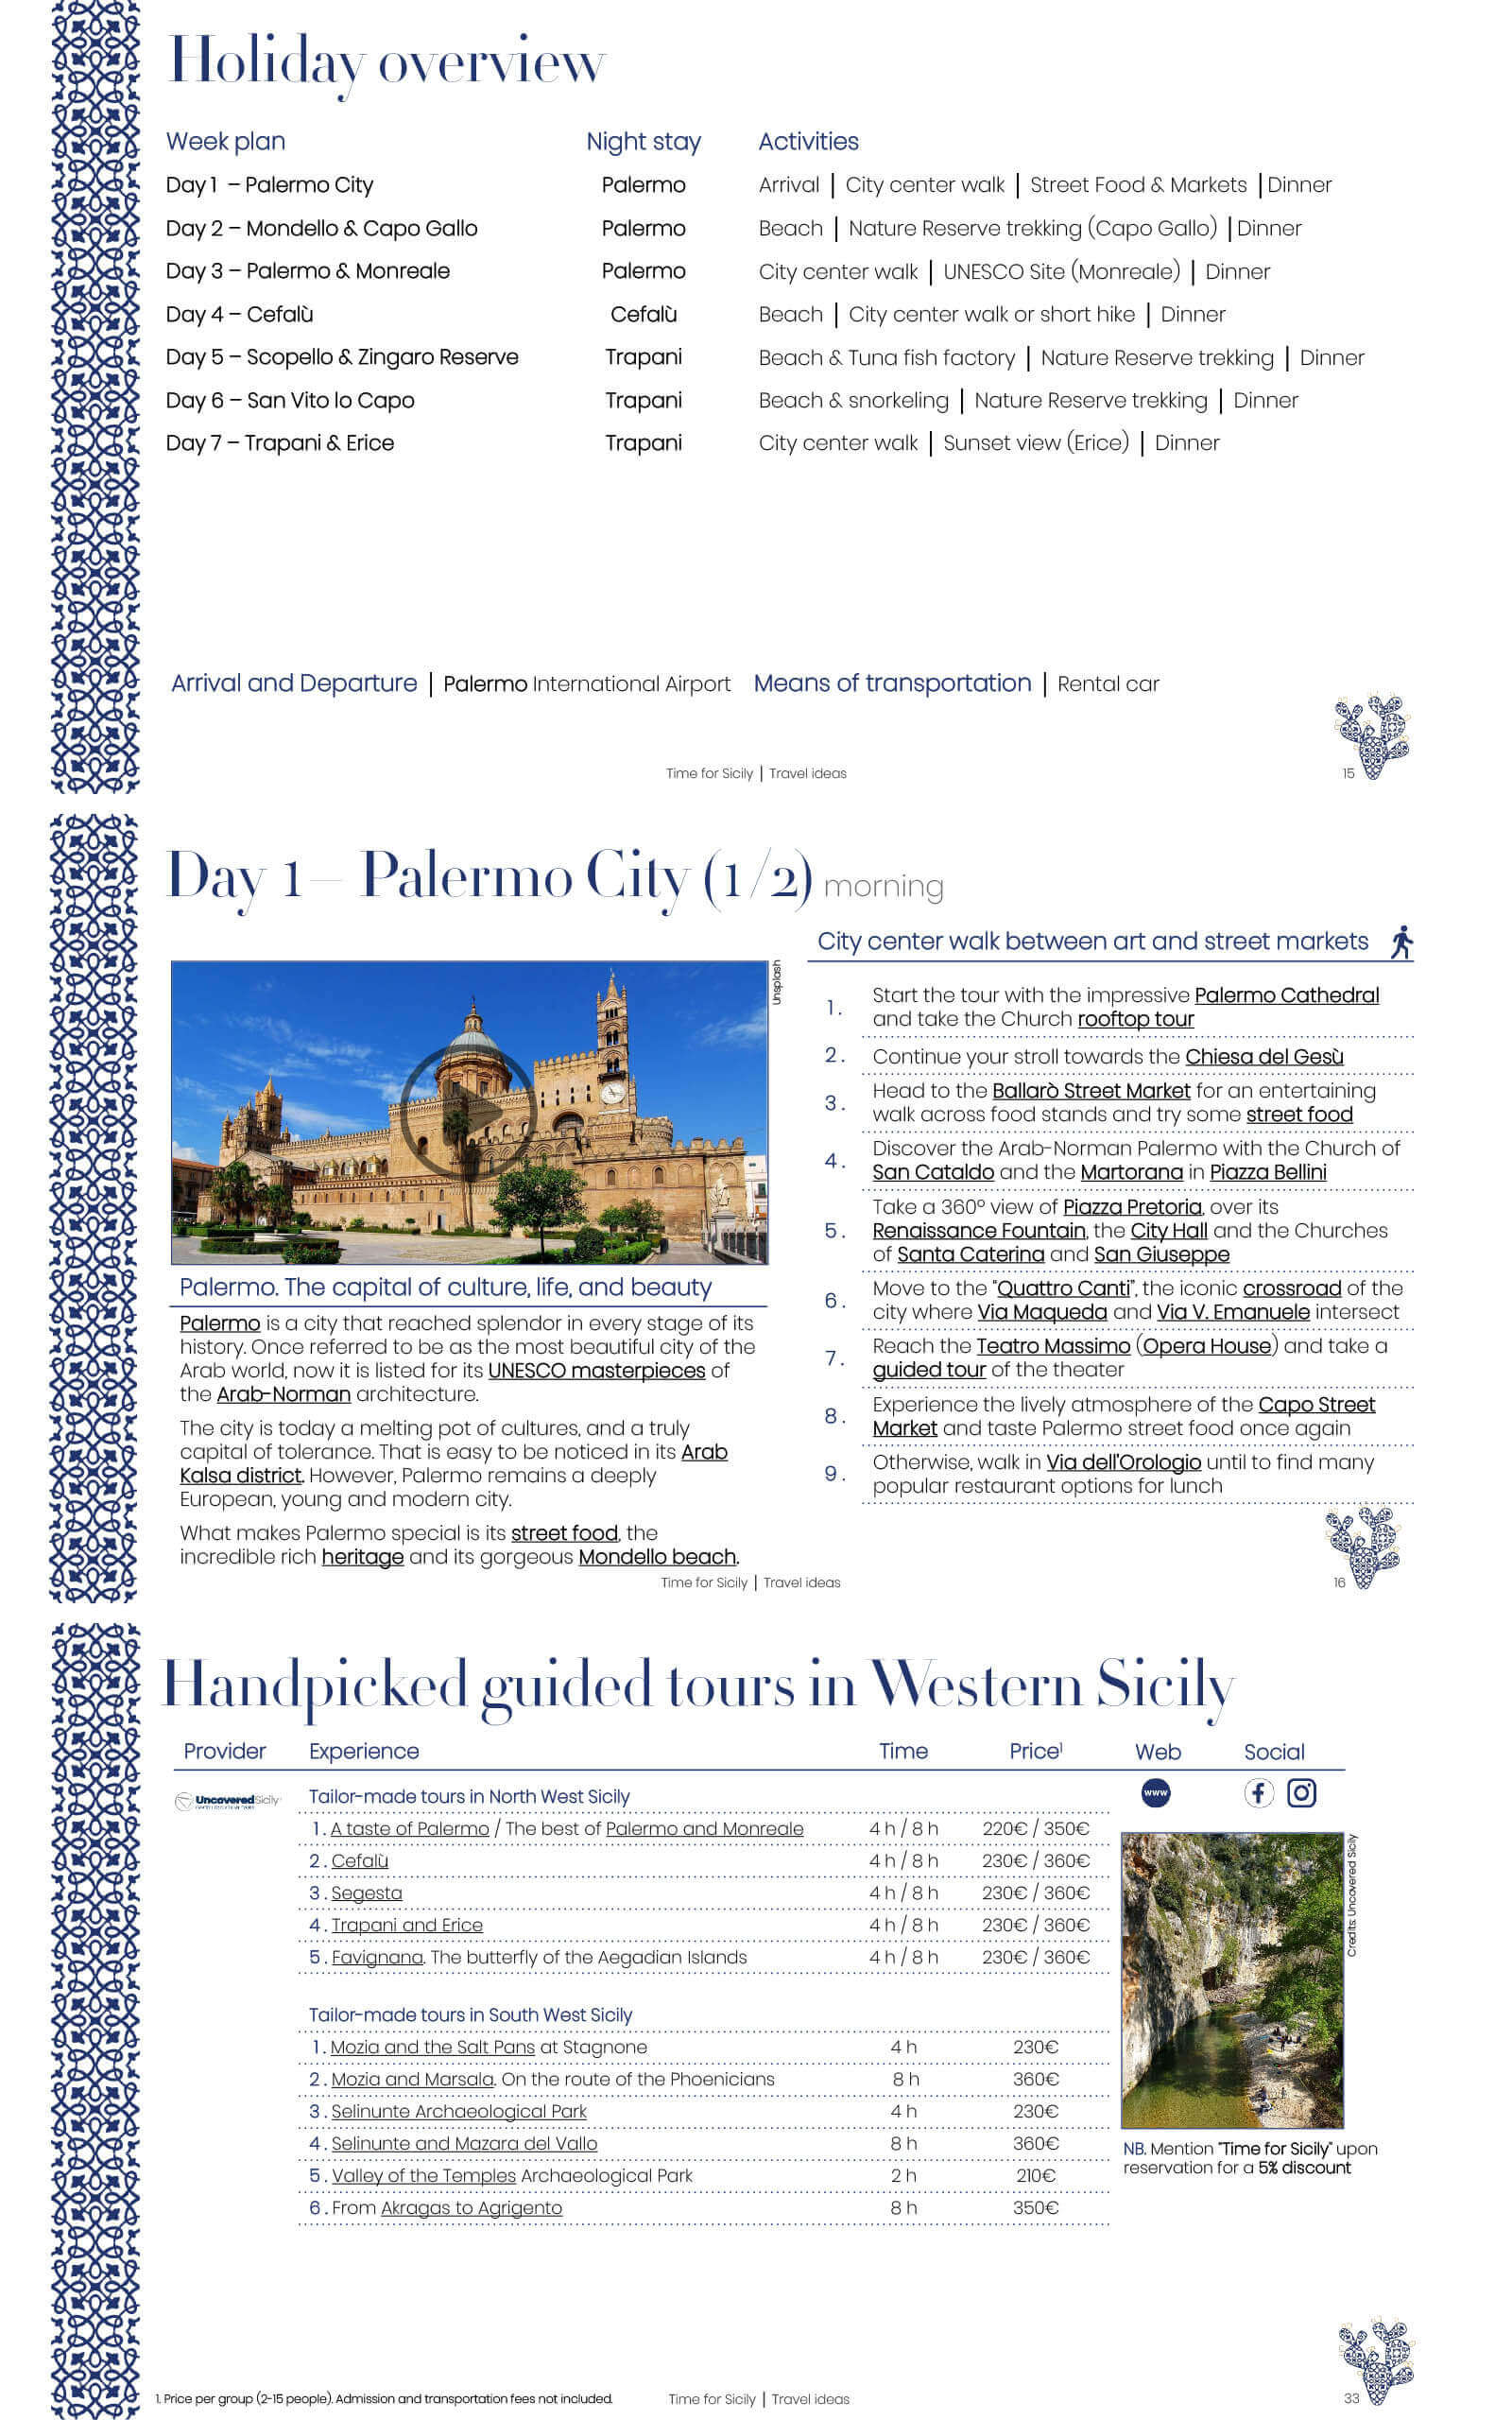 Seven days in Western Sicily Digital Travel Guide book